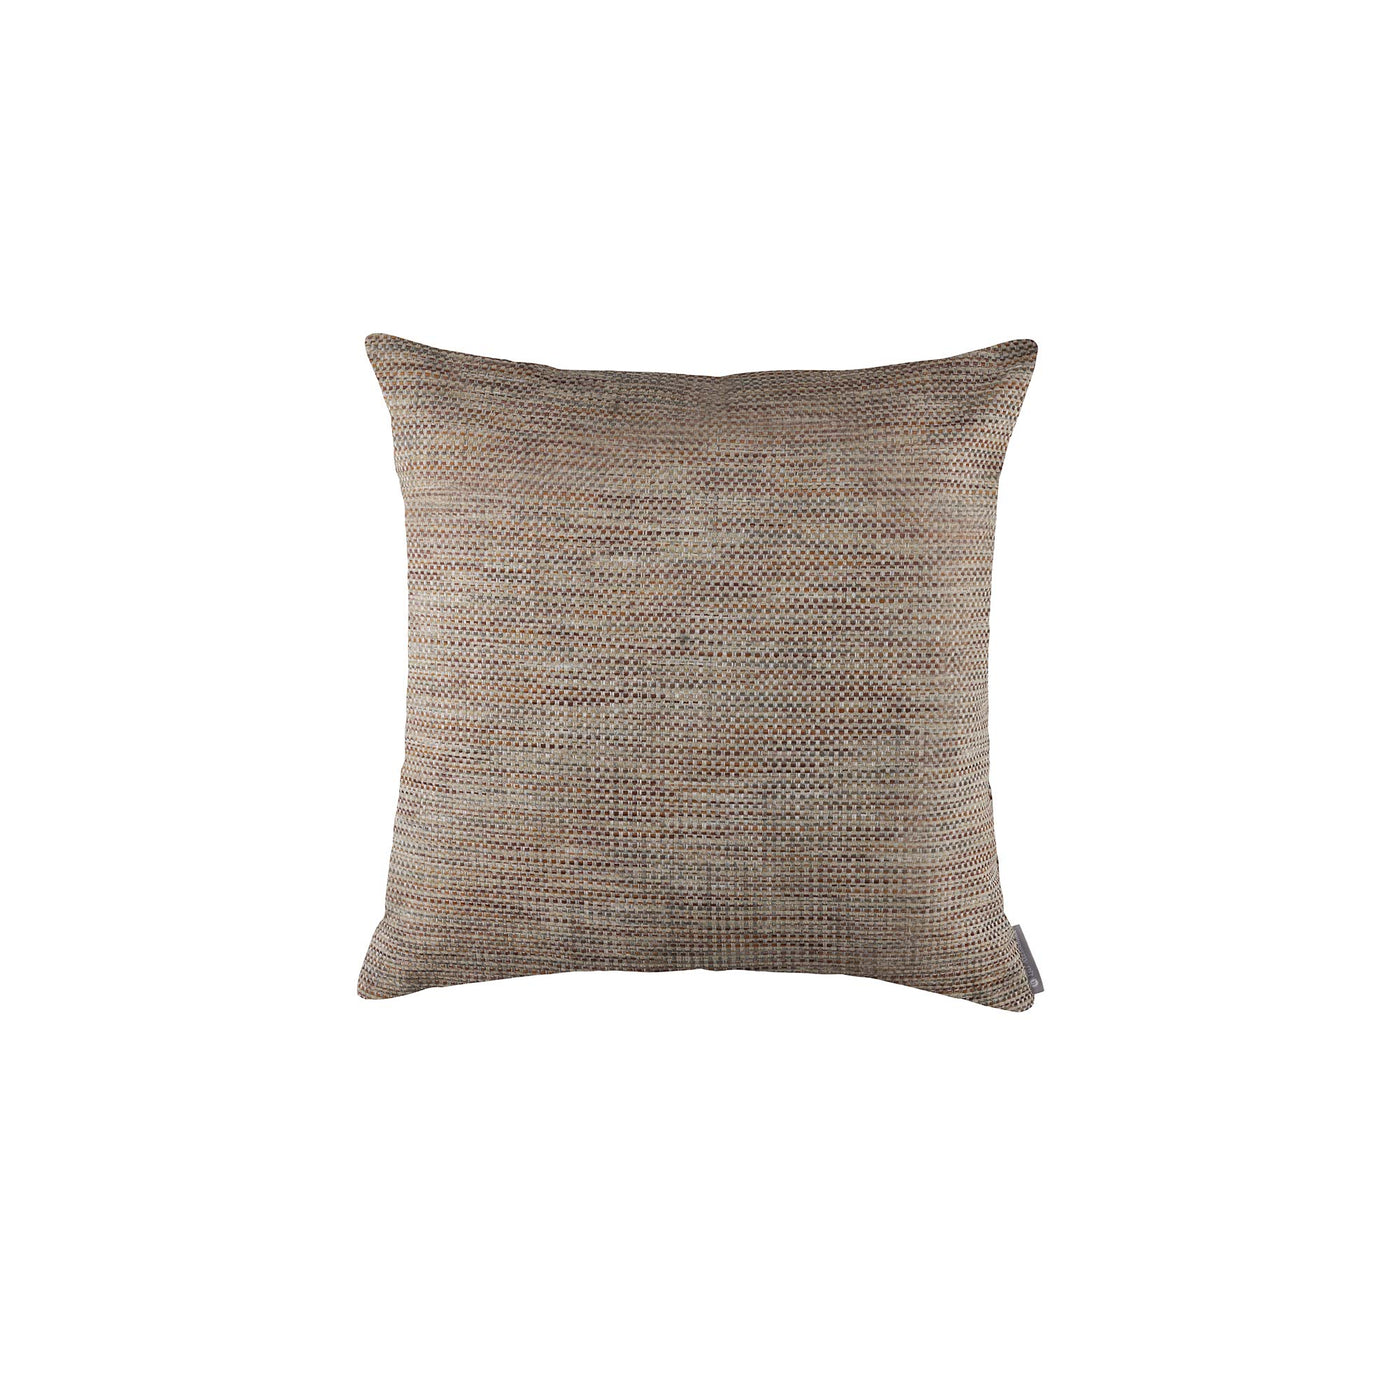 Tweed Jasper European Pillow (26x26)